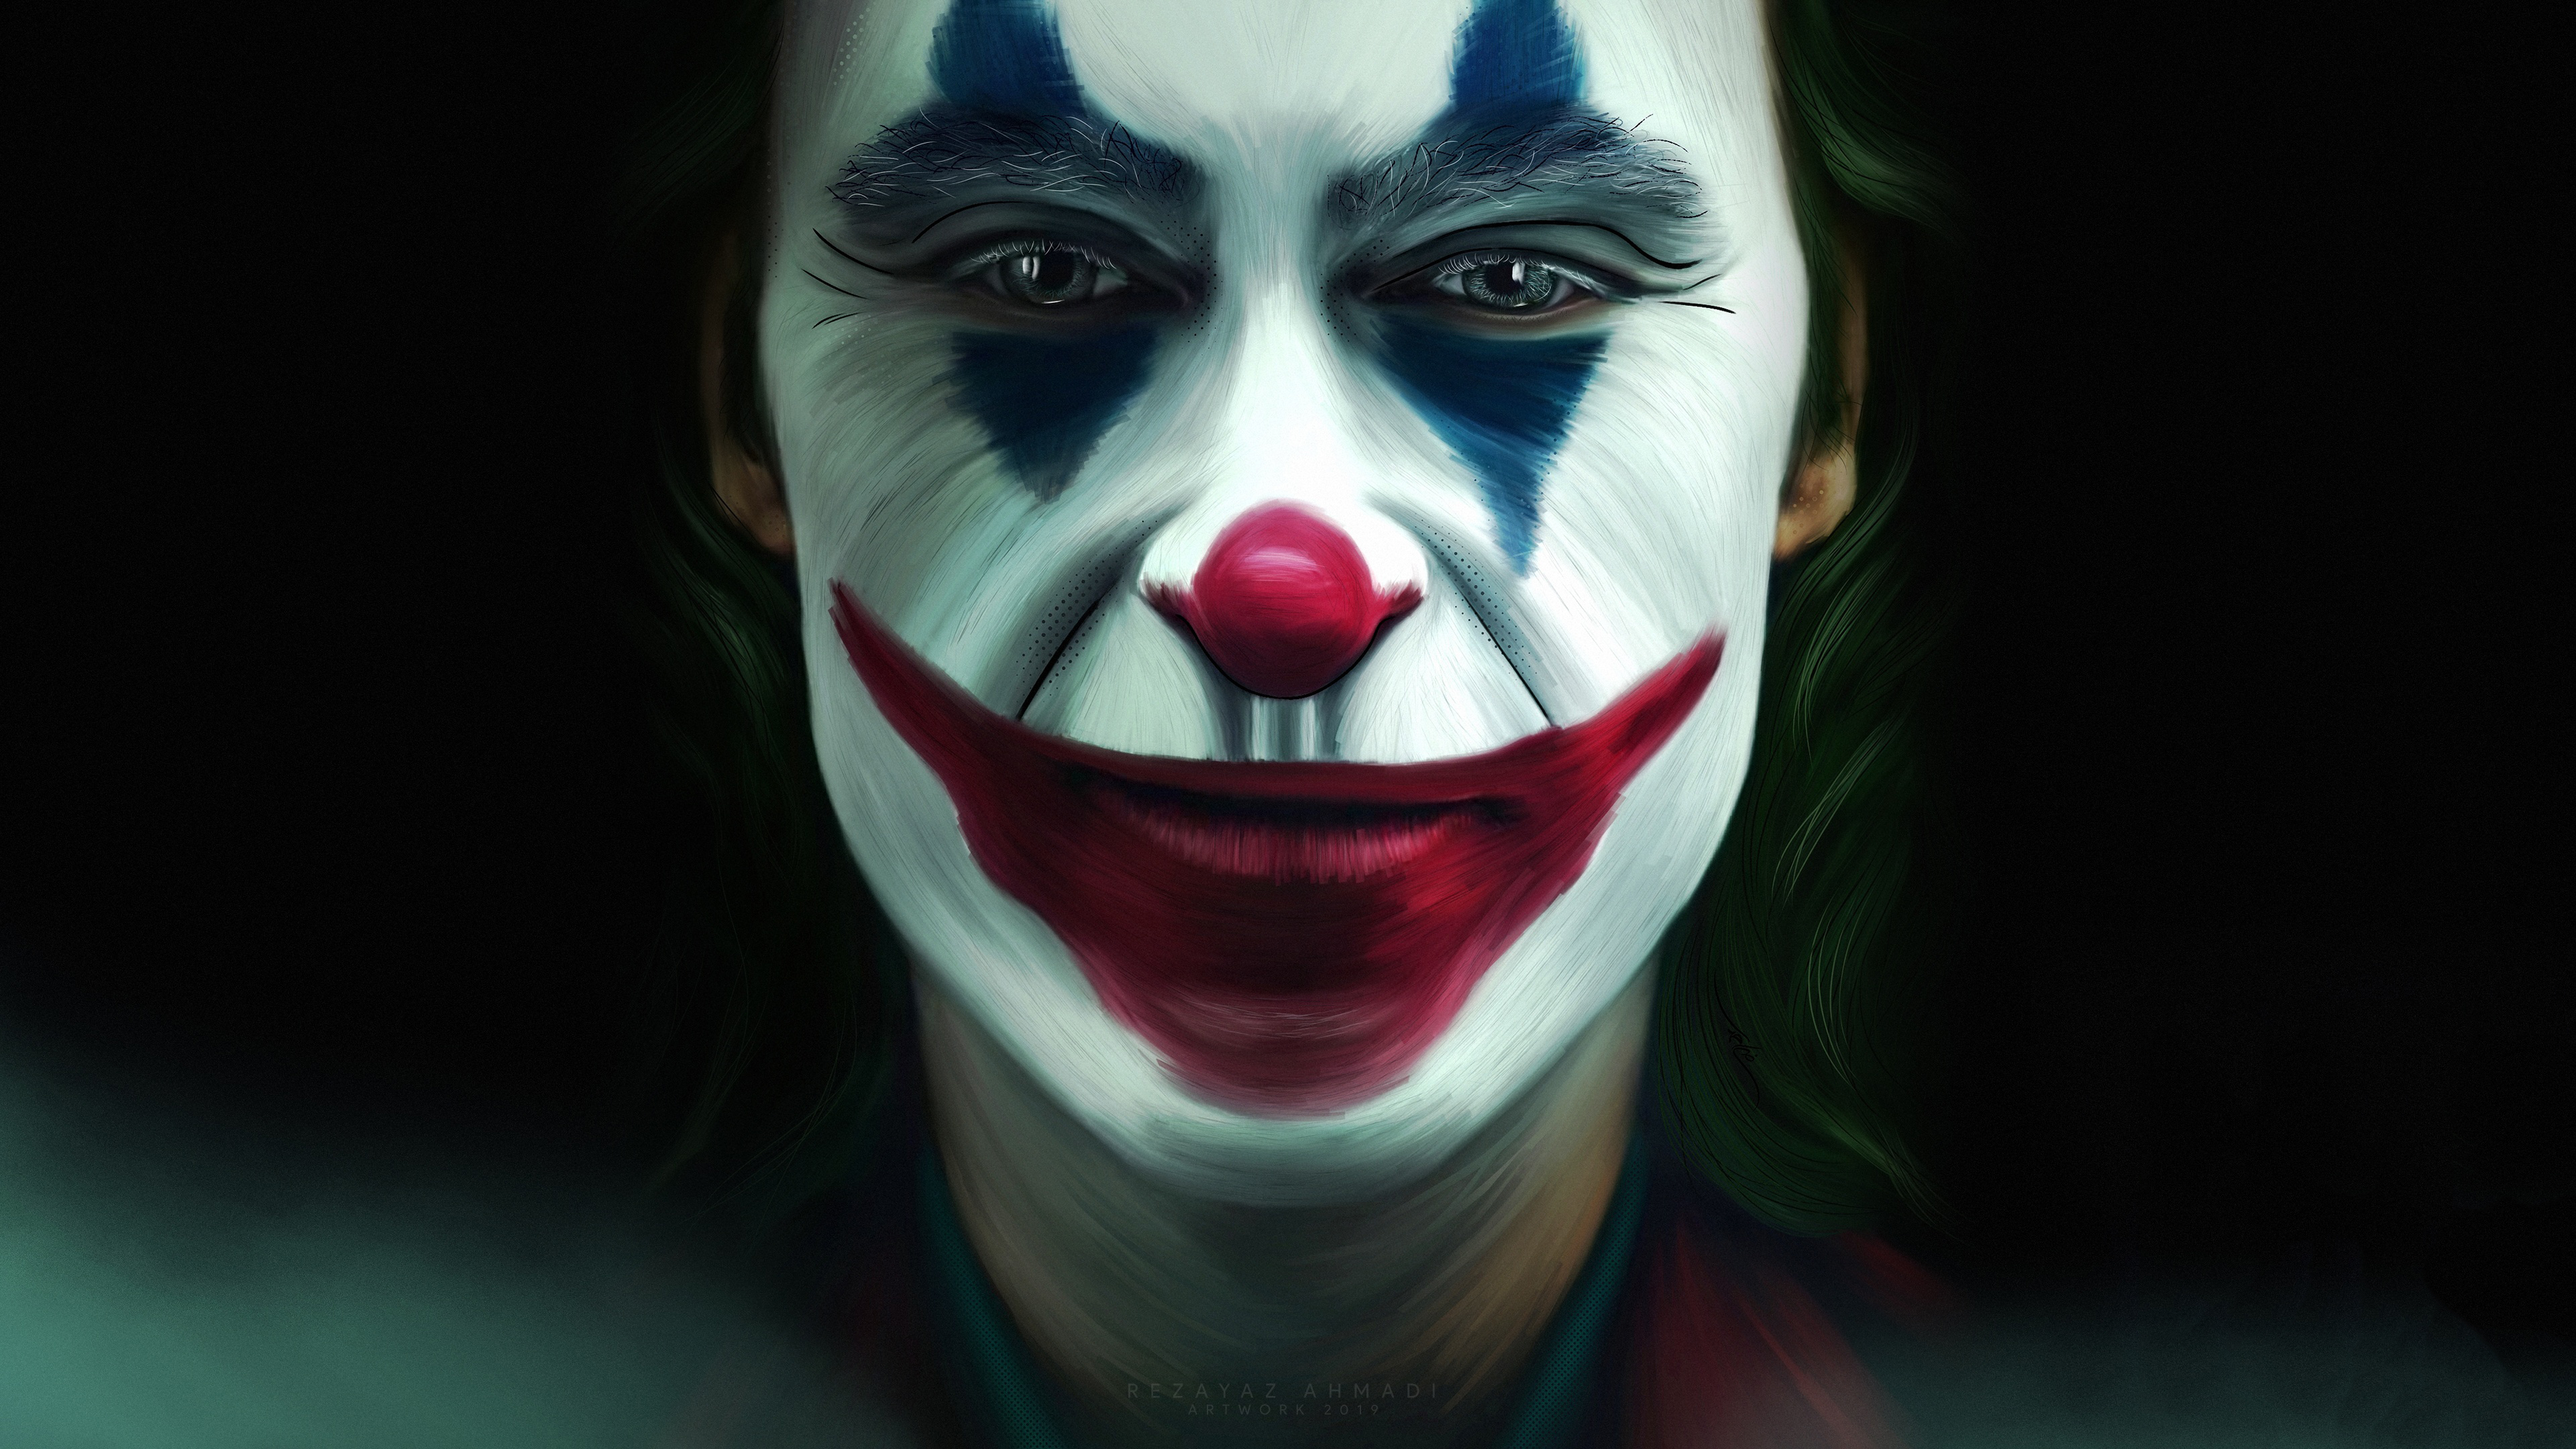 Joker Makeup - Homecare24